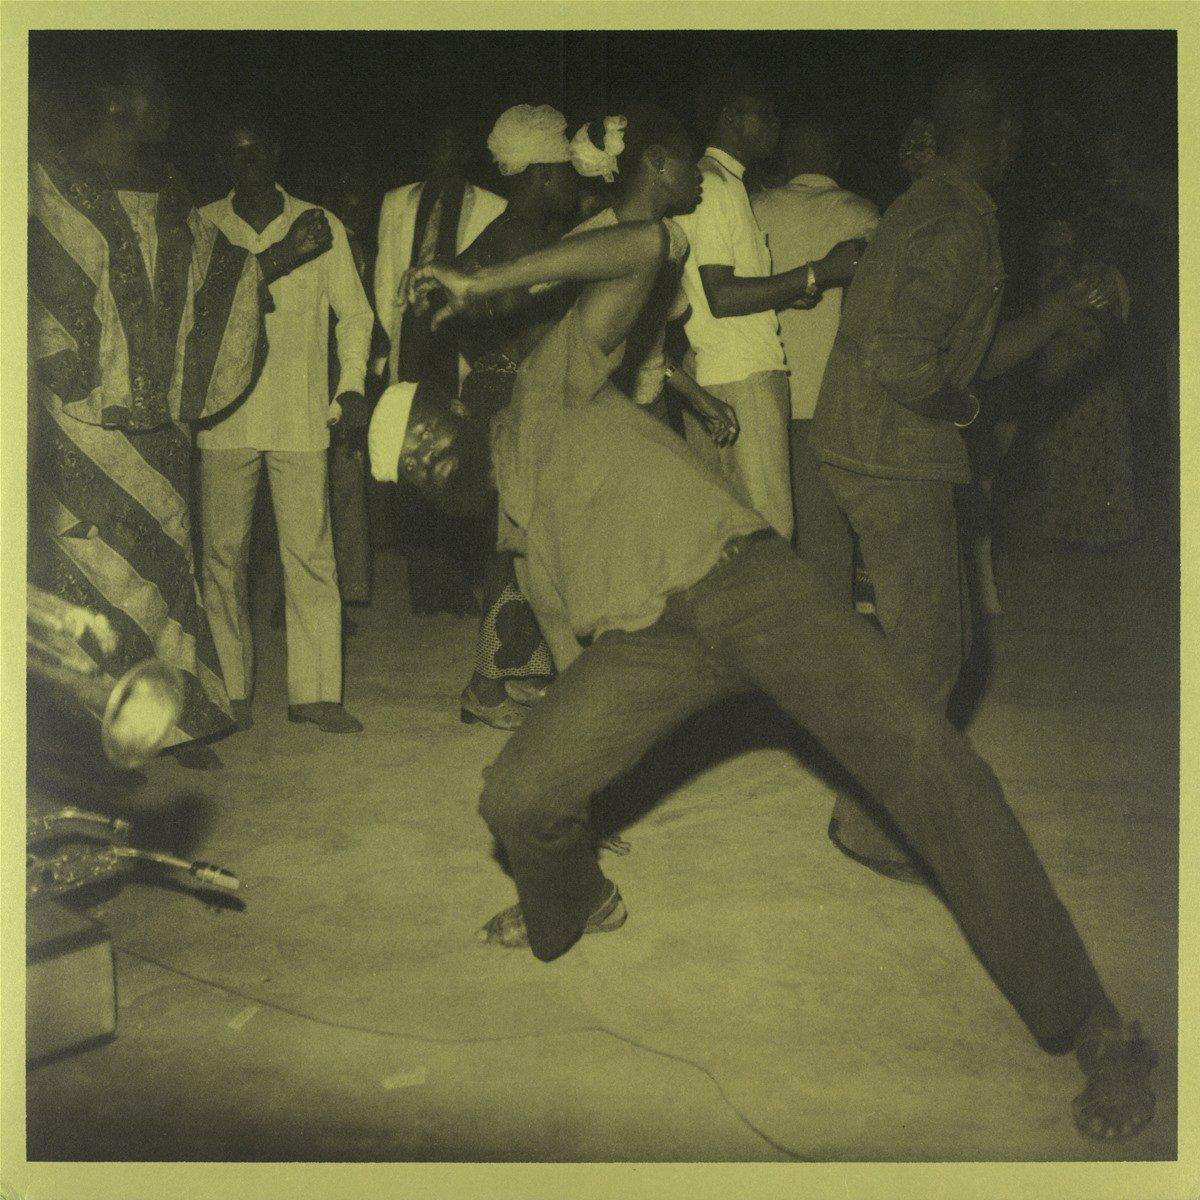 VARIOUS - The Original Sound - Burkina Of Faso (Vinyl)